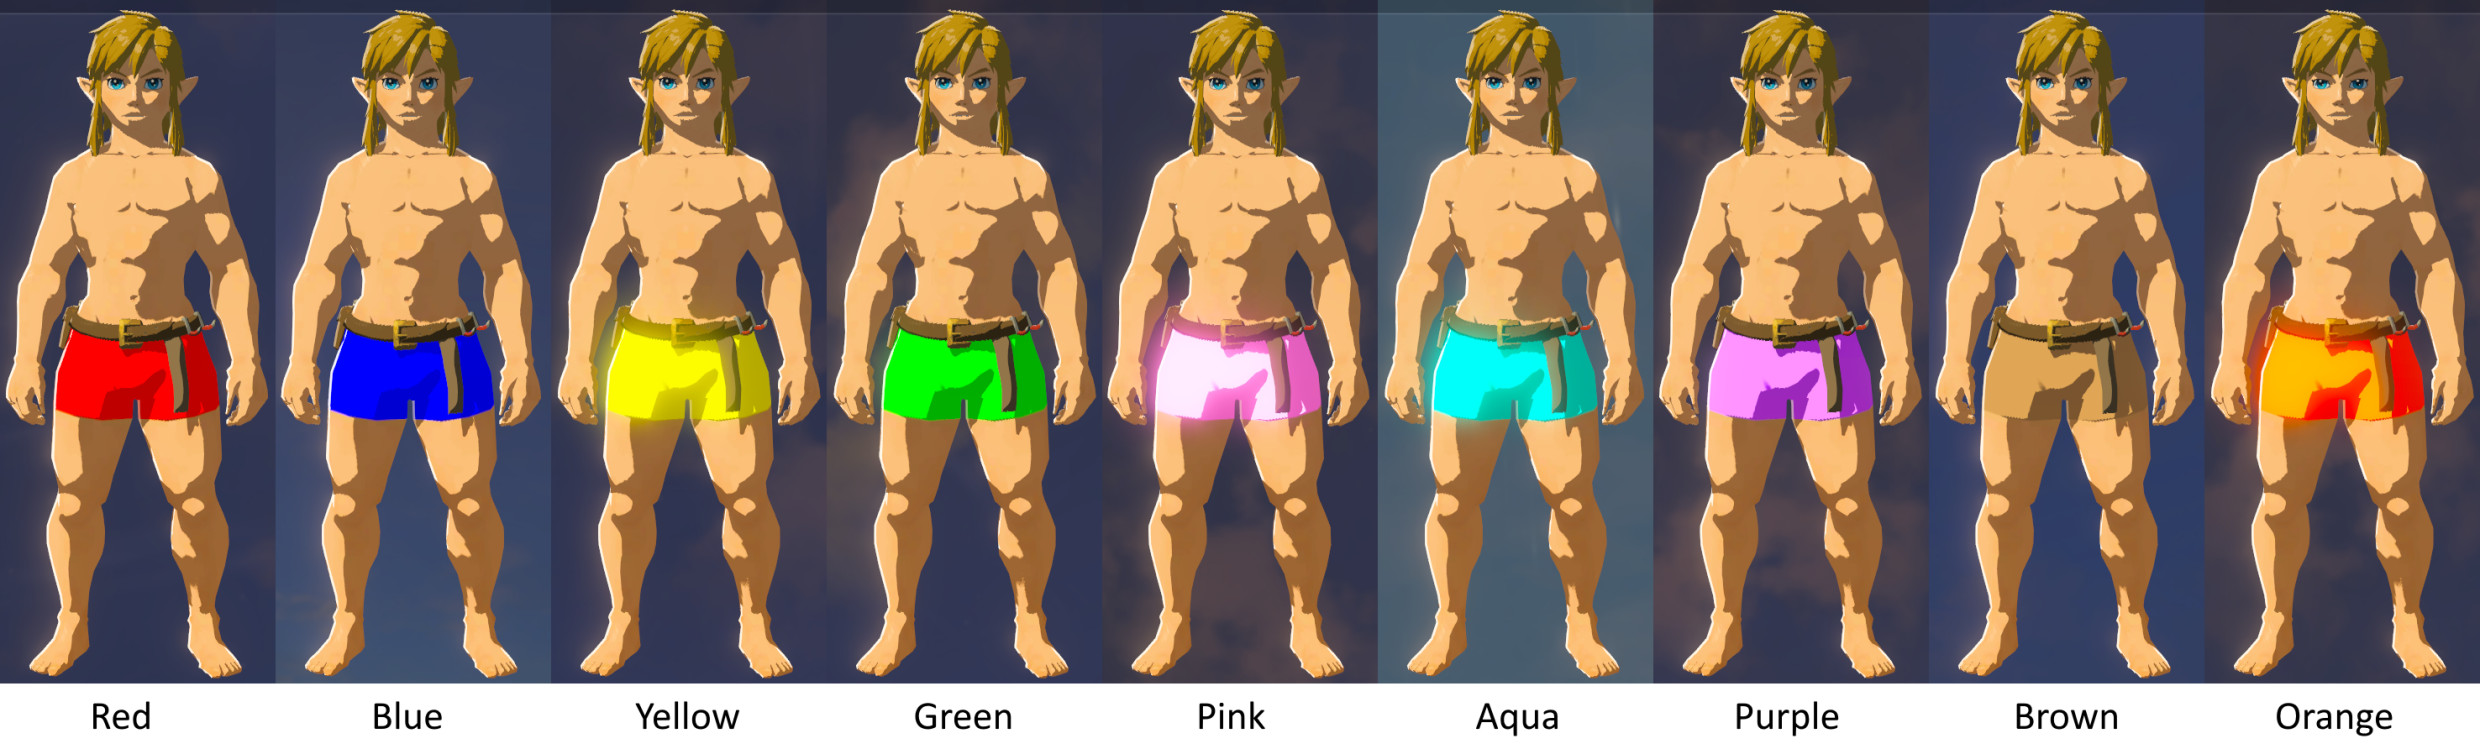 Short Underwear for Muscular Link + 33 Colors [The Legend of Zelda: Breath  of the Wild (WiiU)] [Mods]